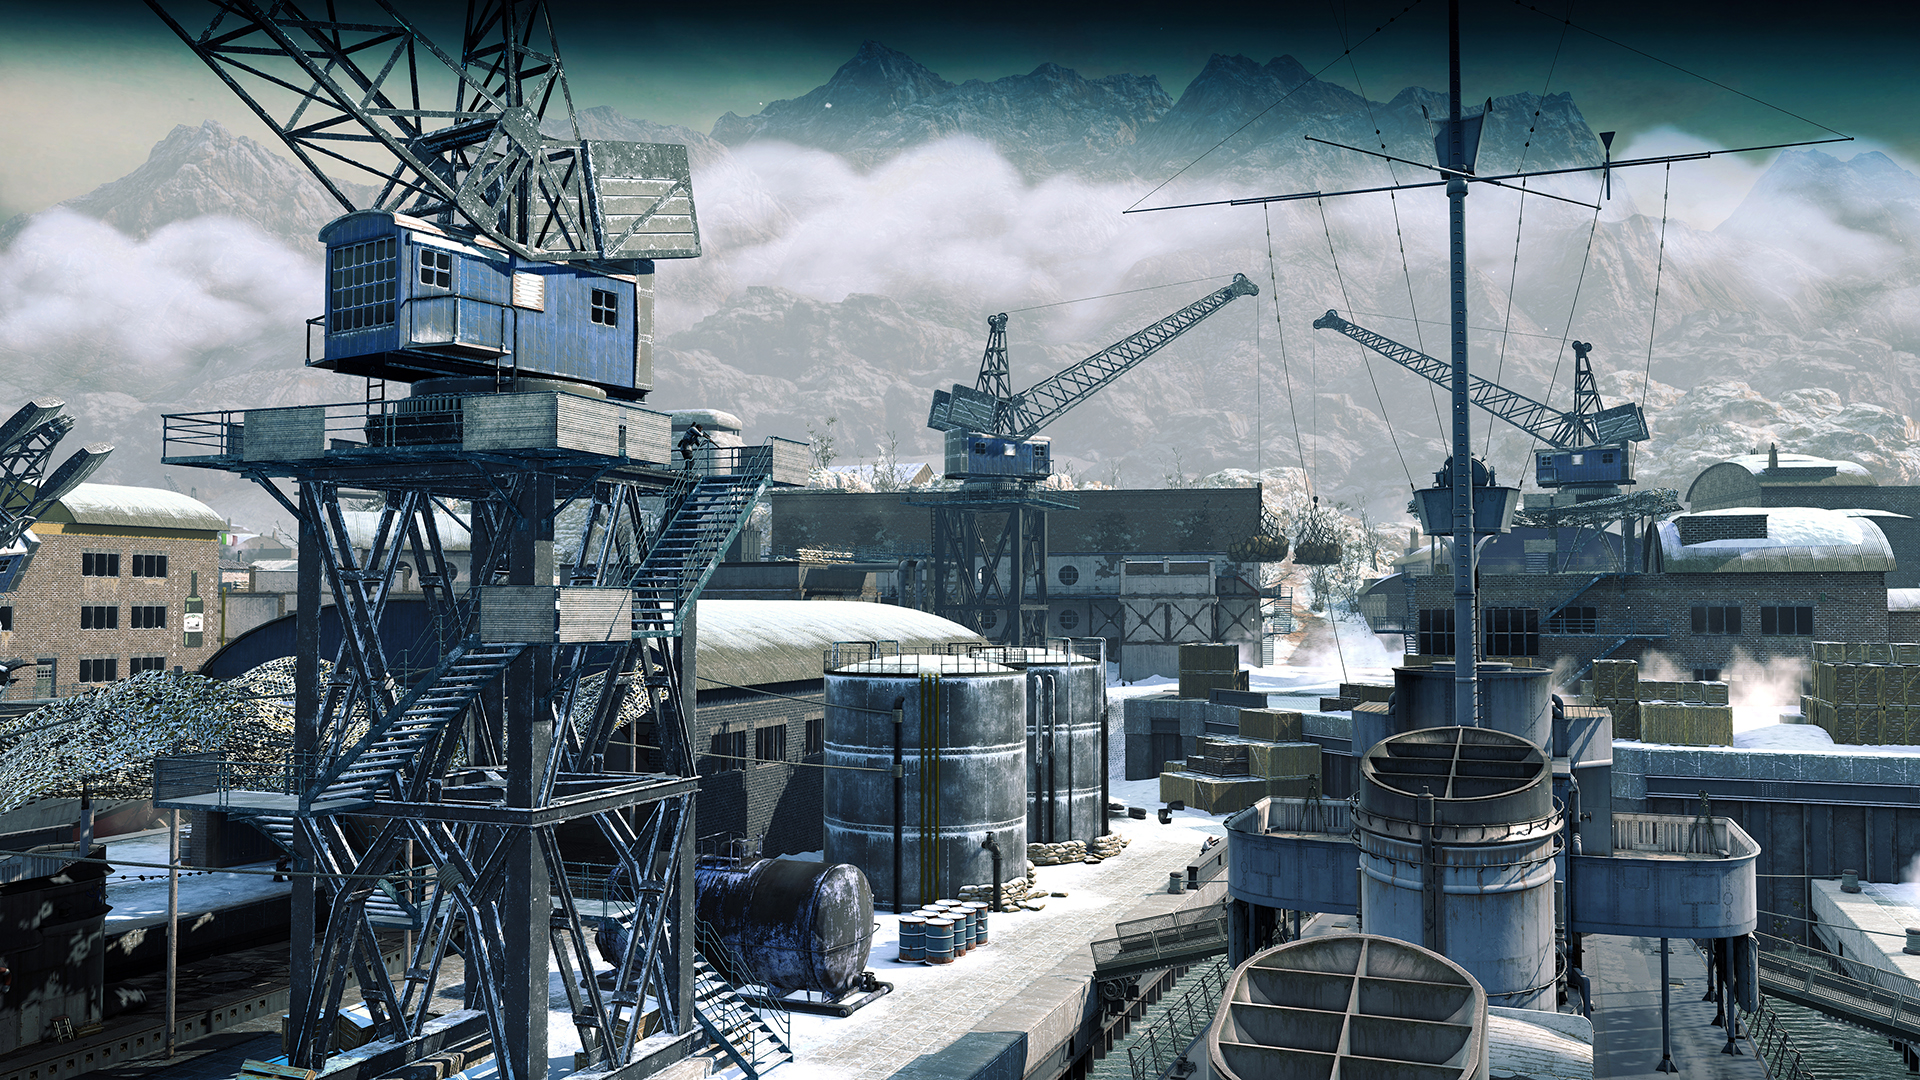 Sniper Elite 4 - Deathstorm Part 1: Inception screenshot